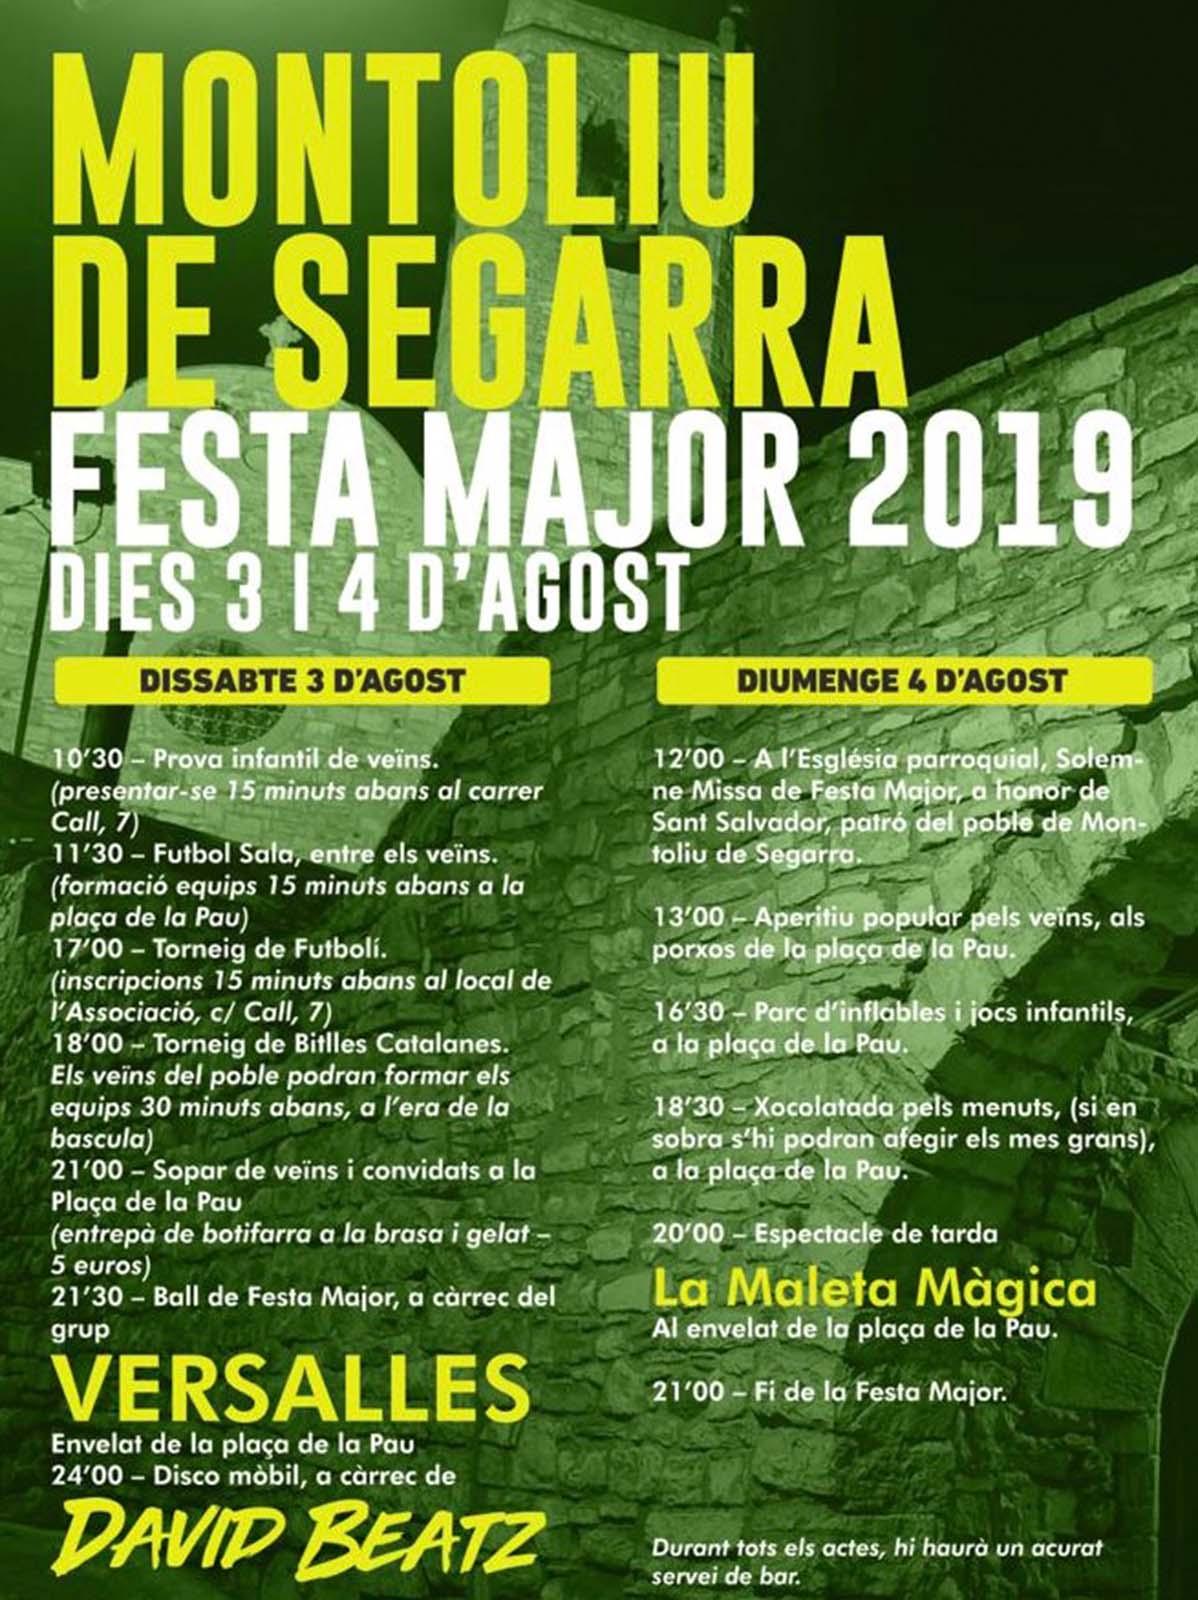 Festa Major de Montoliu de Segarra 2019